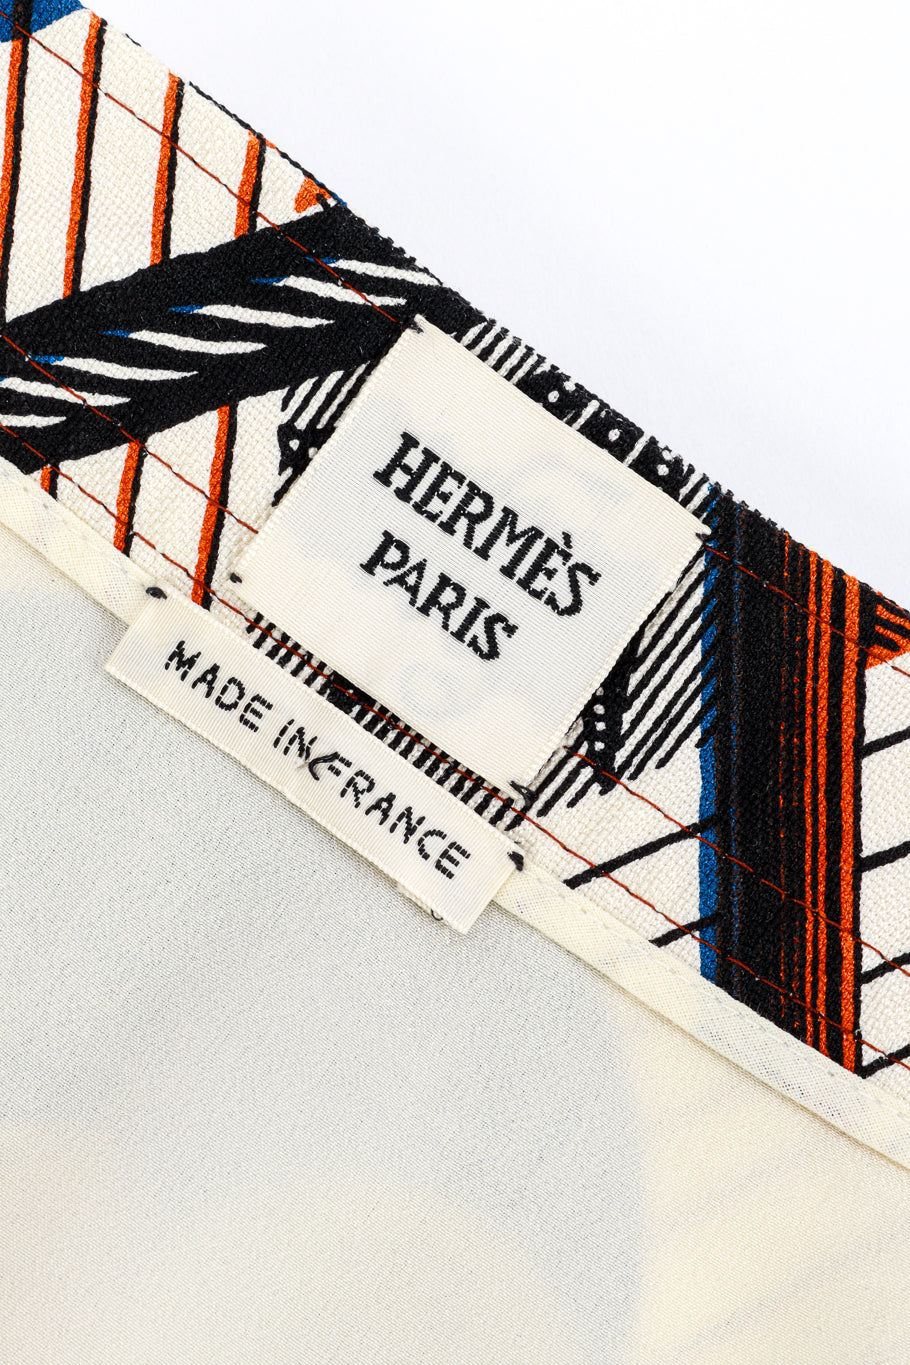 Hermes Ethnic Print Skirt label detail @RECESS LA